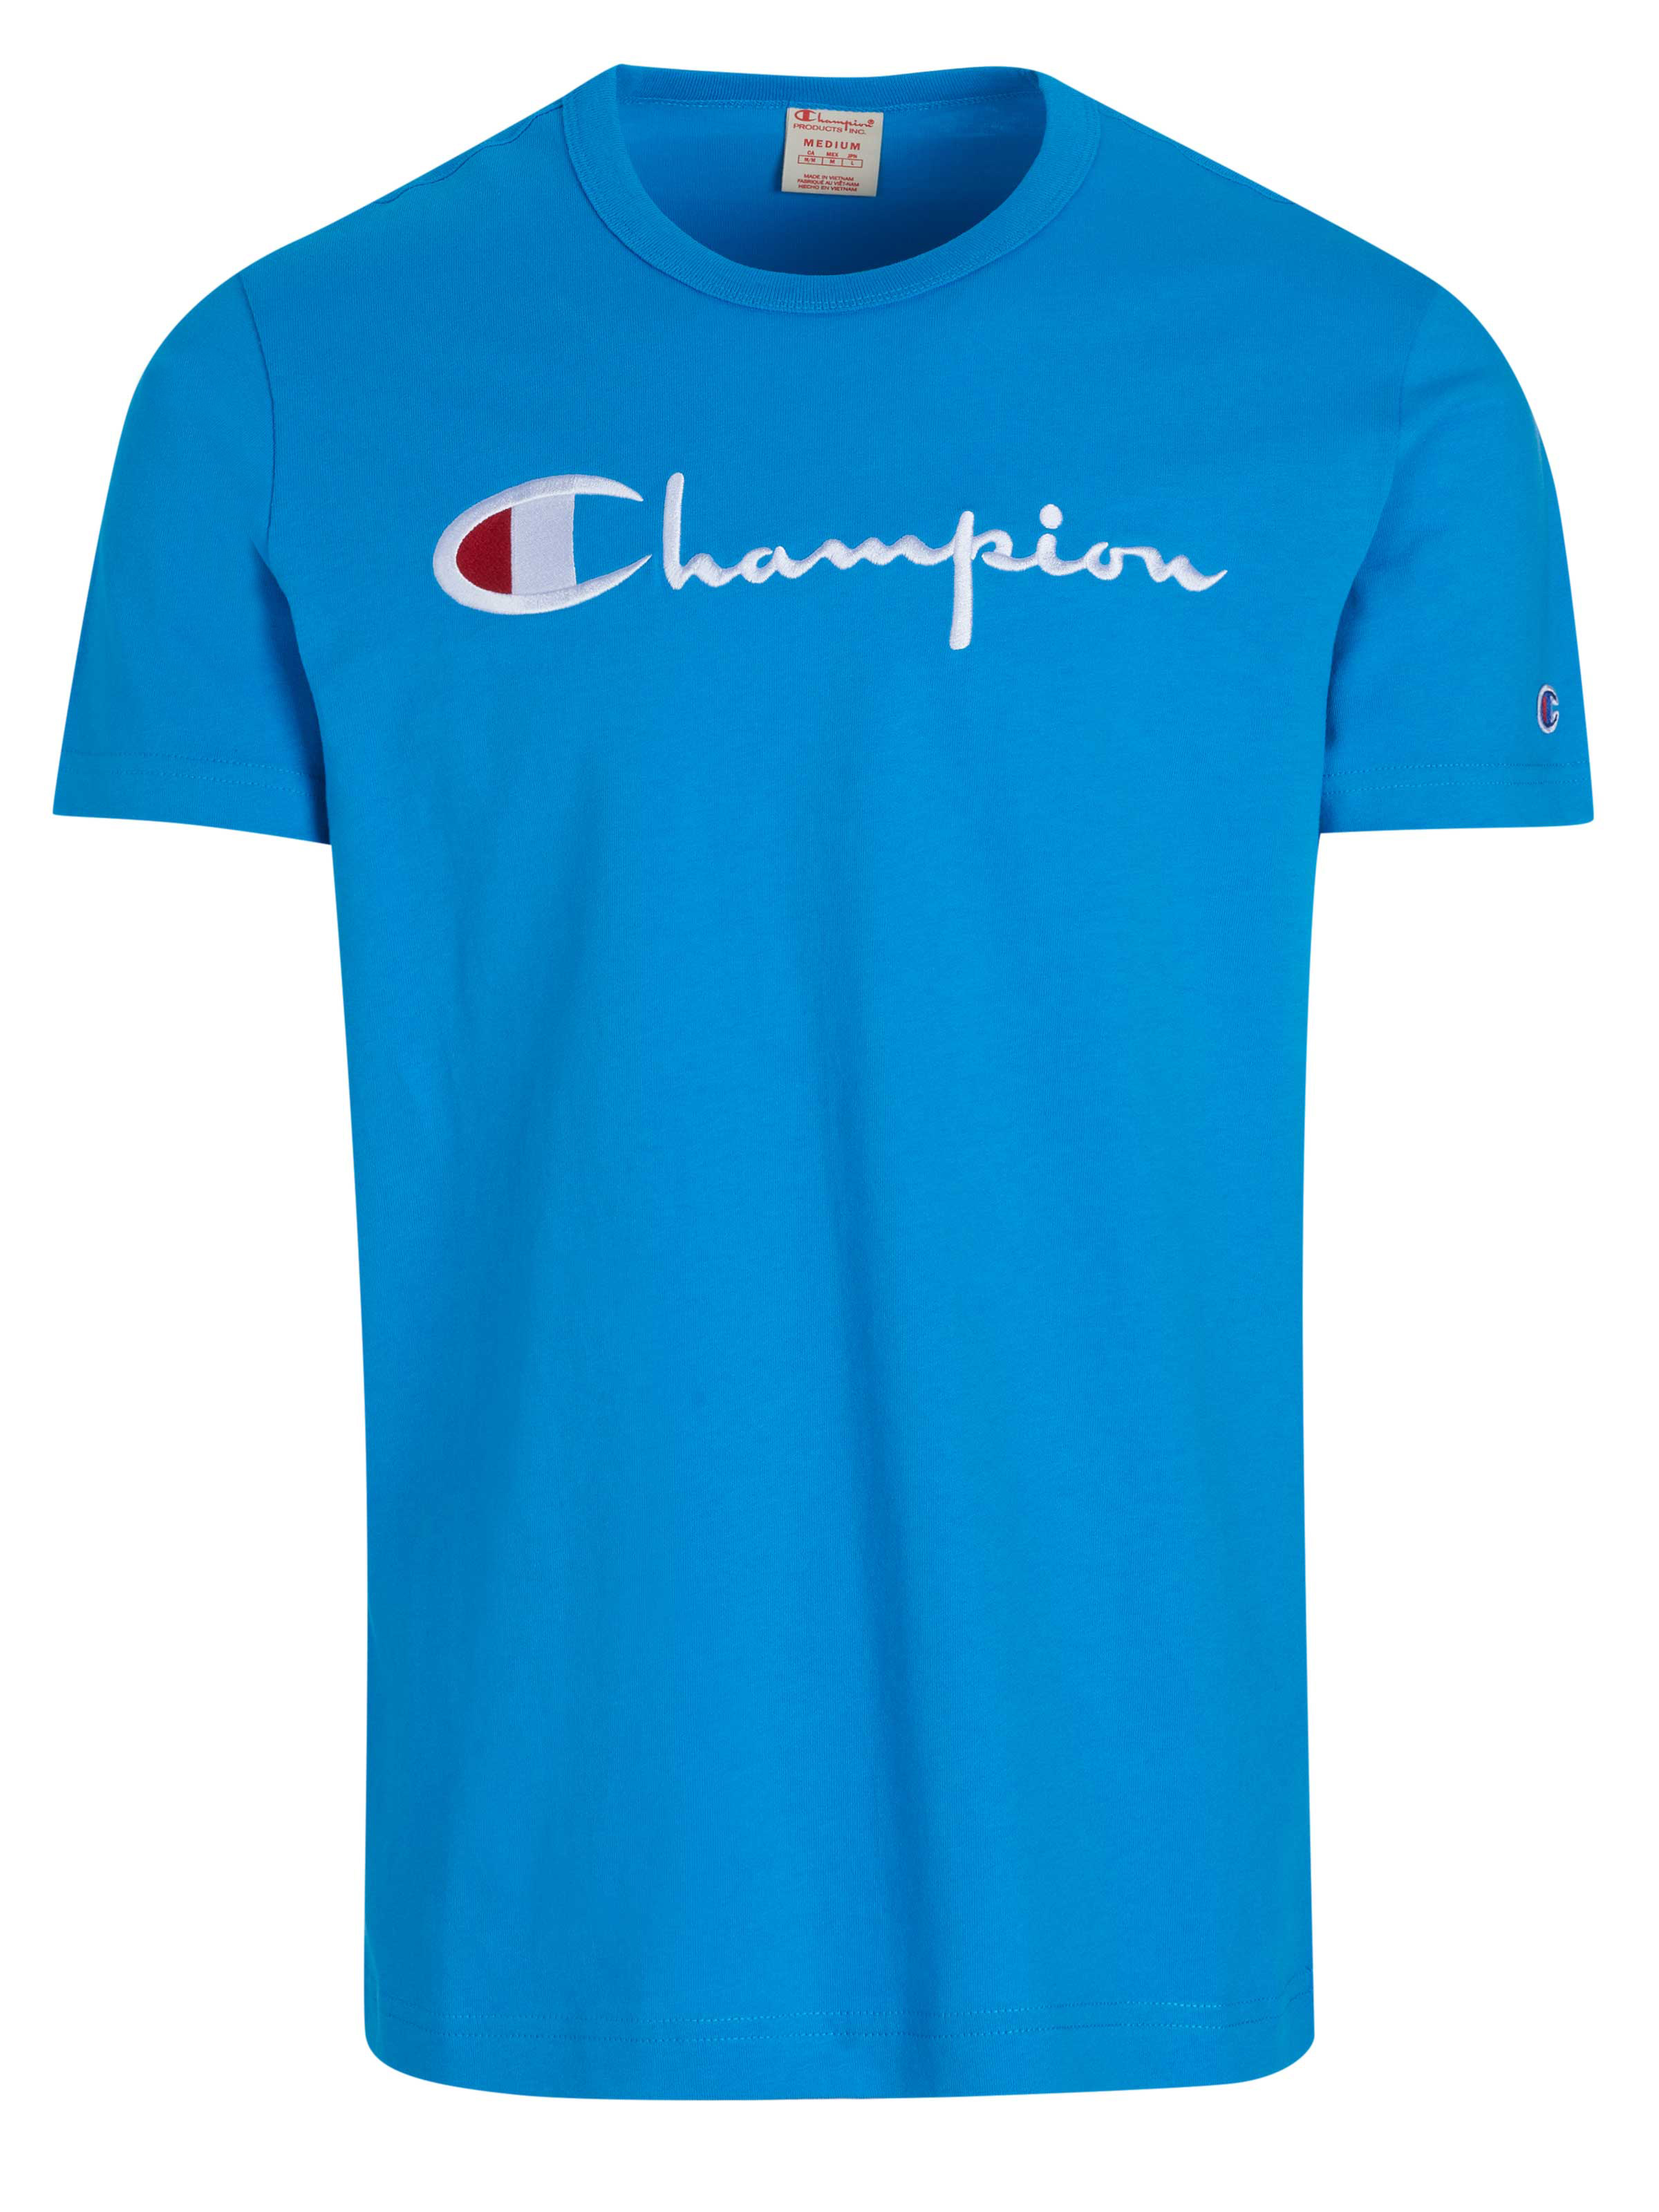 Champion T-shirt Blue on SALE Fashionesta 